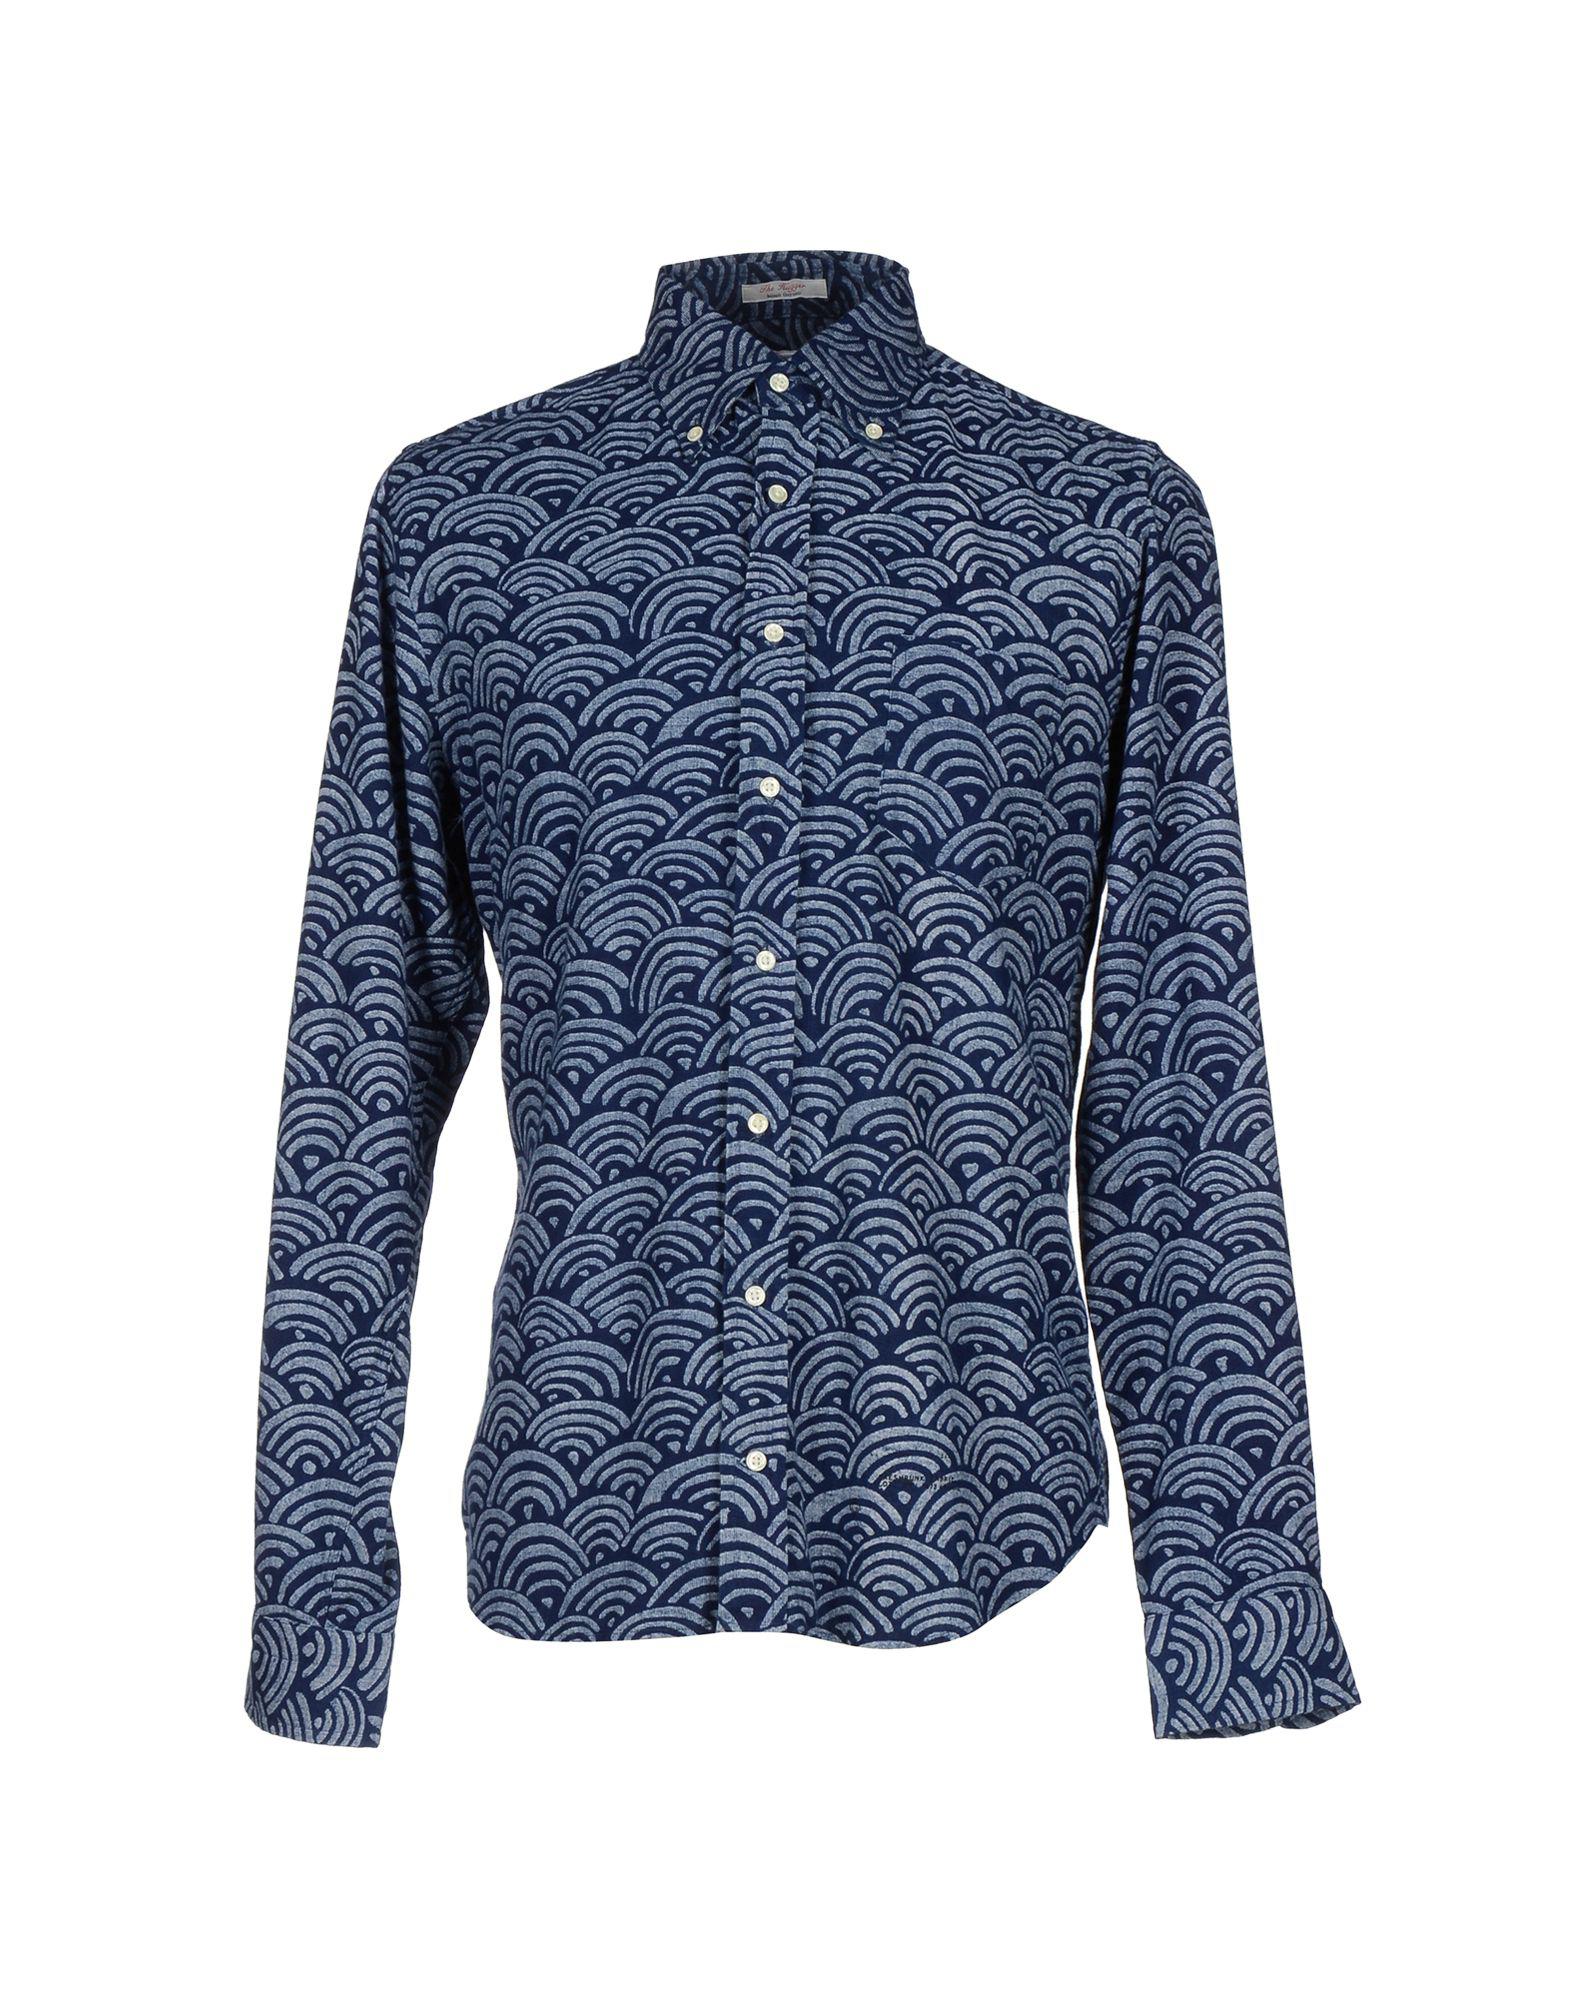 Gant Rugger Cotton Shirt in Dark Blue (Blue) for Men - Lyst